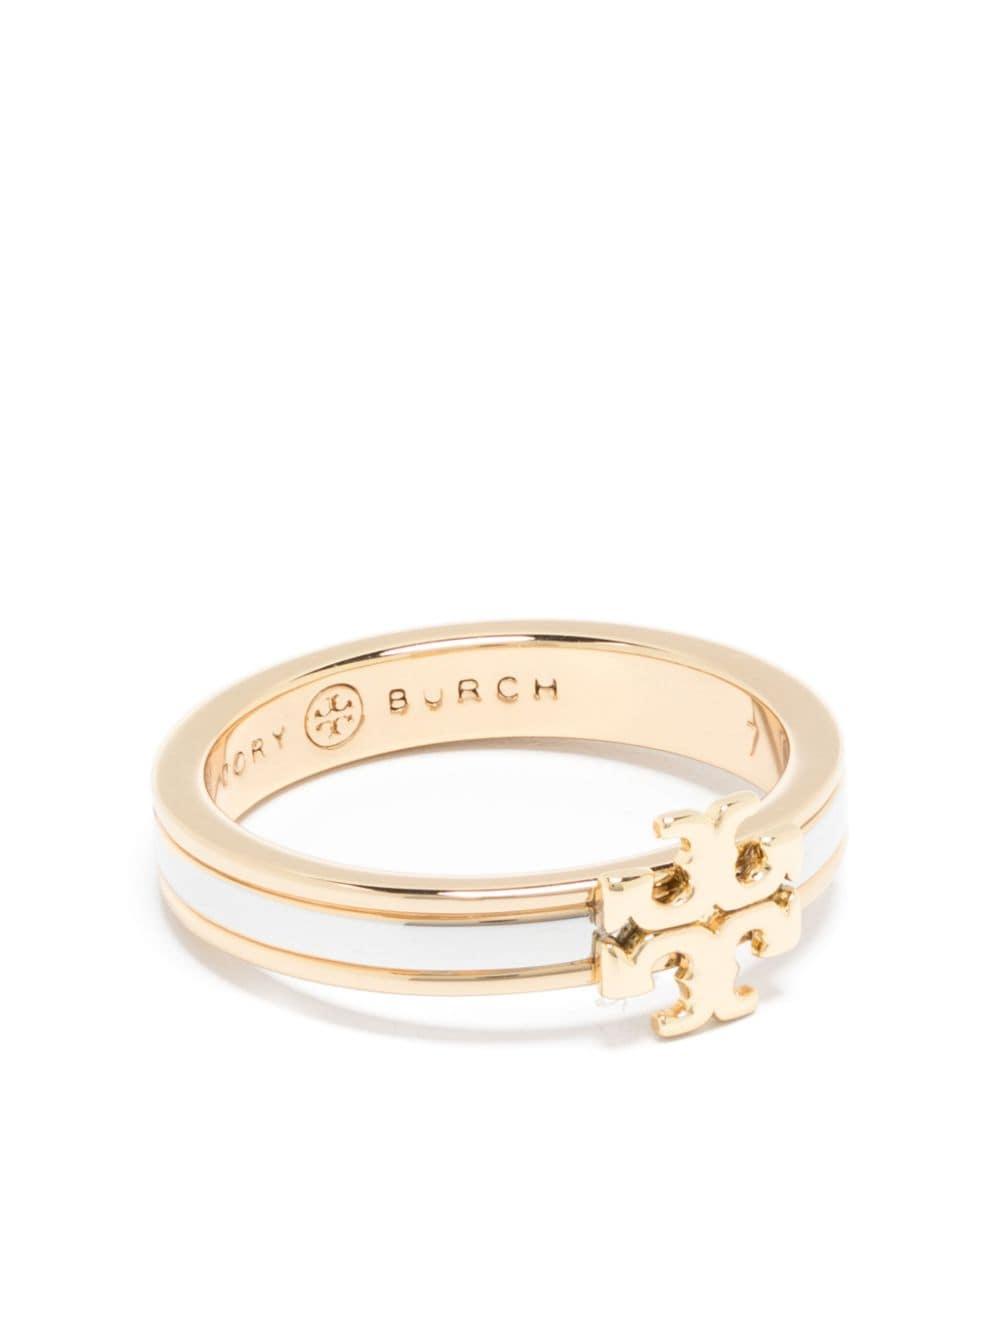 Tory Burch Kira Double T Ring In Gold